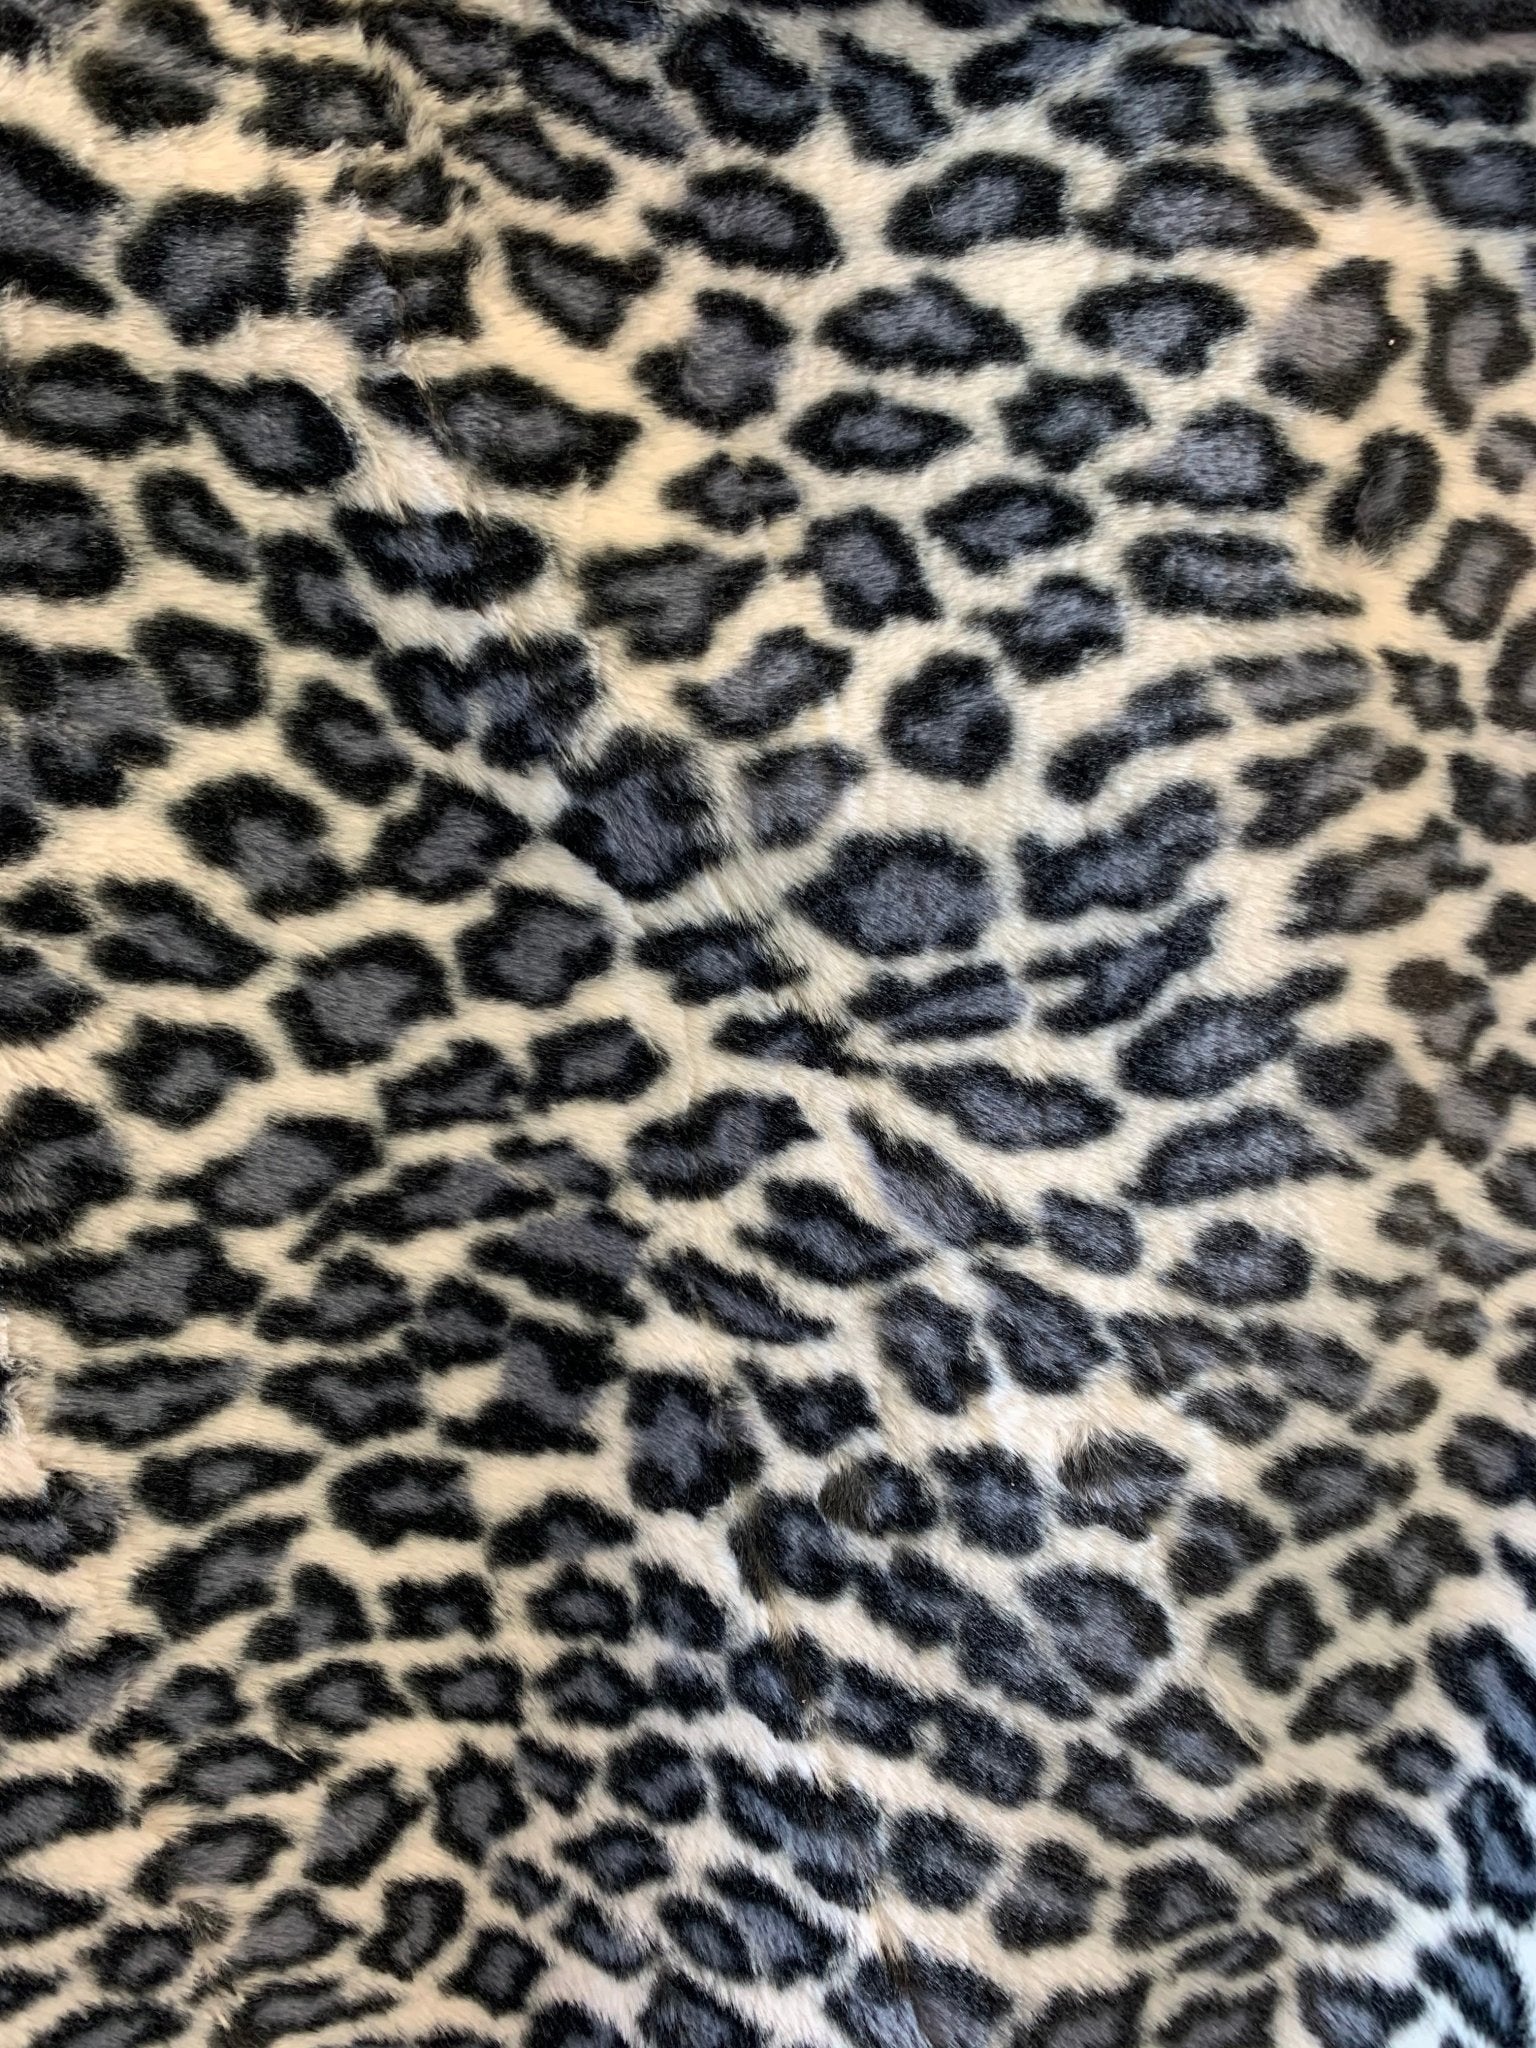 Leopard Fake Faux Fur Fabric By The Yard - Faux Fur Material Fashion FabricICEFABRICICE FABRICSDenimBy The Yard (60 inches Wide)Leopard Fake Faux Fur Fabric By The Yard - Faux Fur Material Fashion Fabric ICEFABRIC Denim